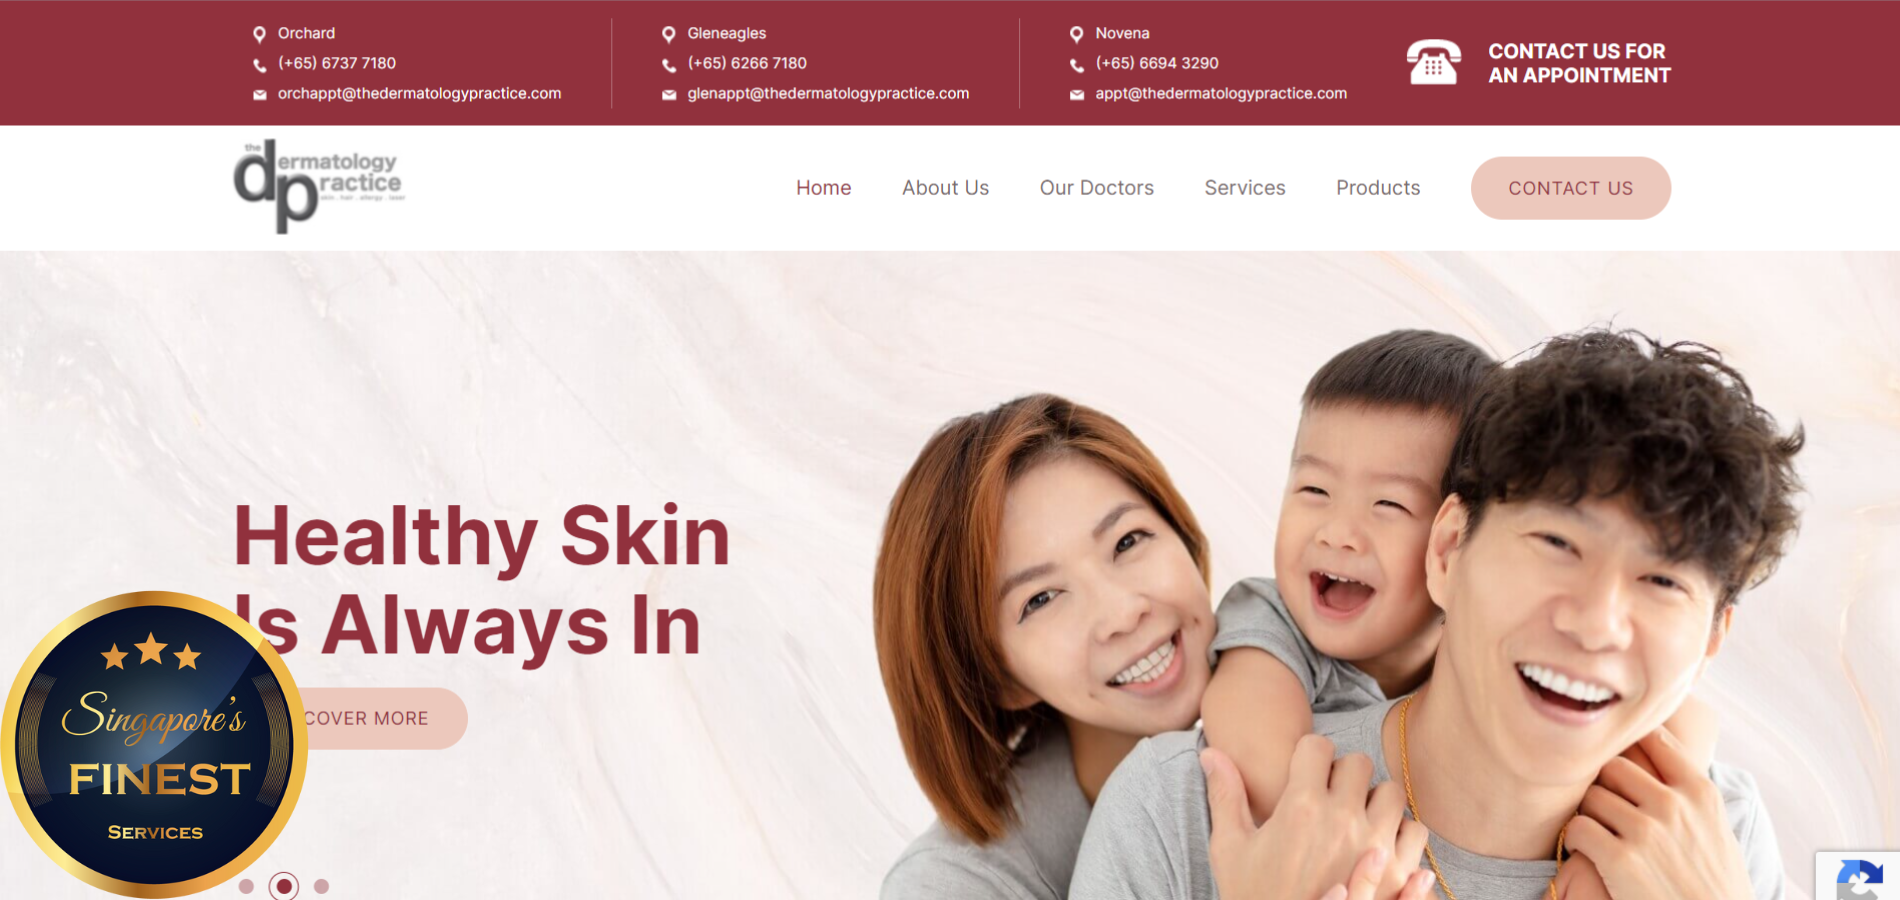 The Finest Dermatologist Clinics in Singapore